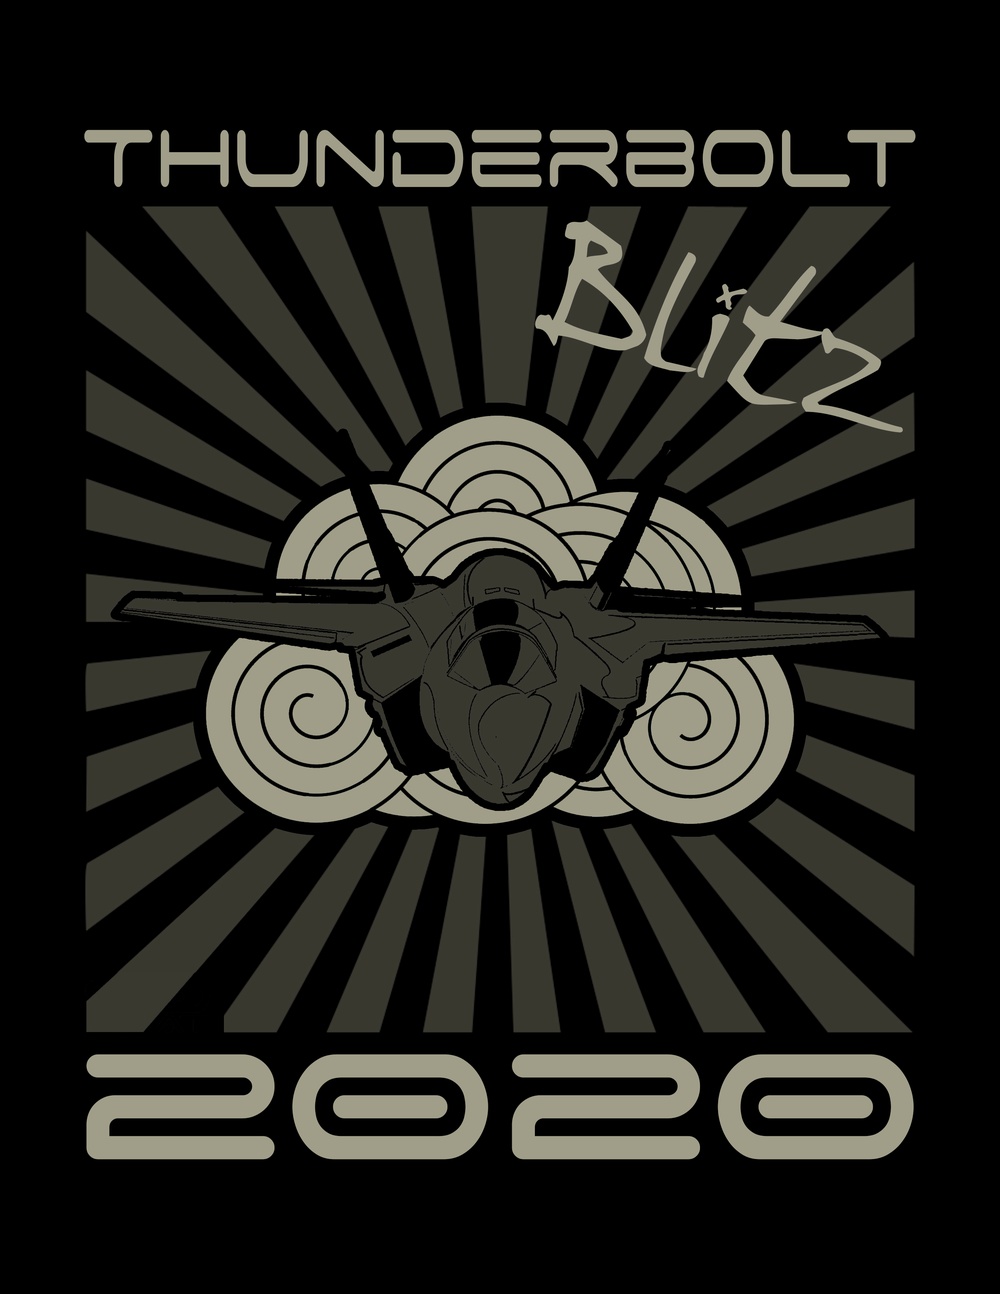 Thunderbolt Cup 2020 T-shirt Design